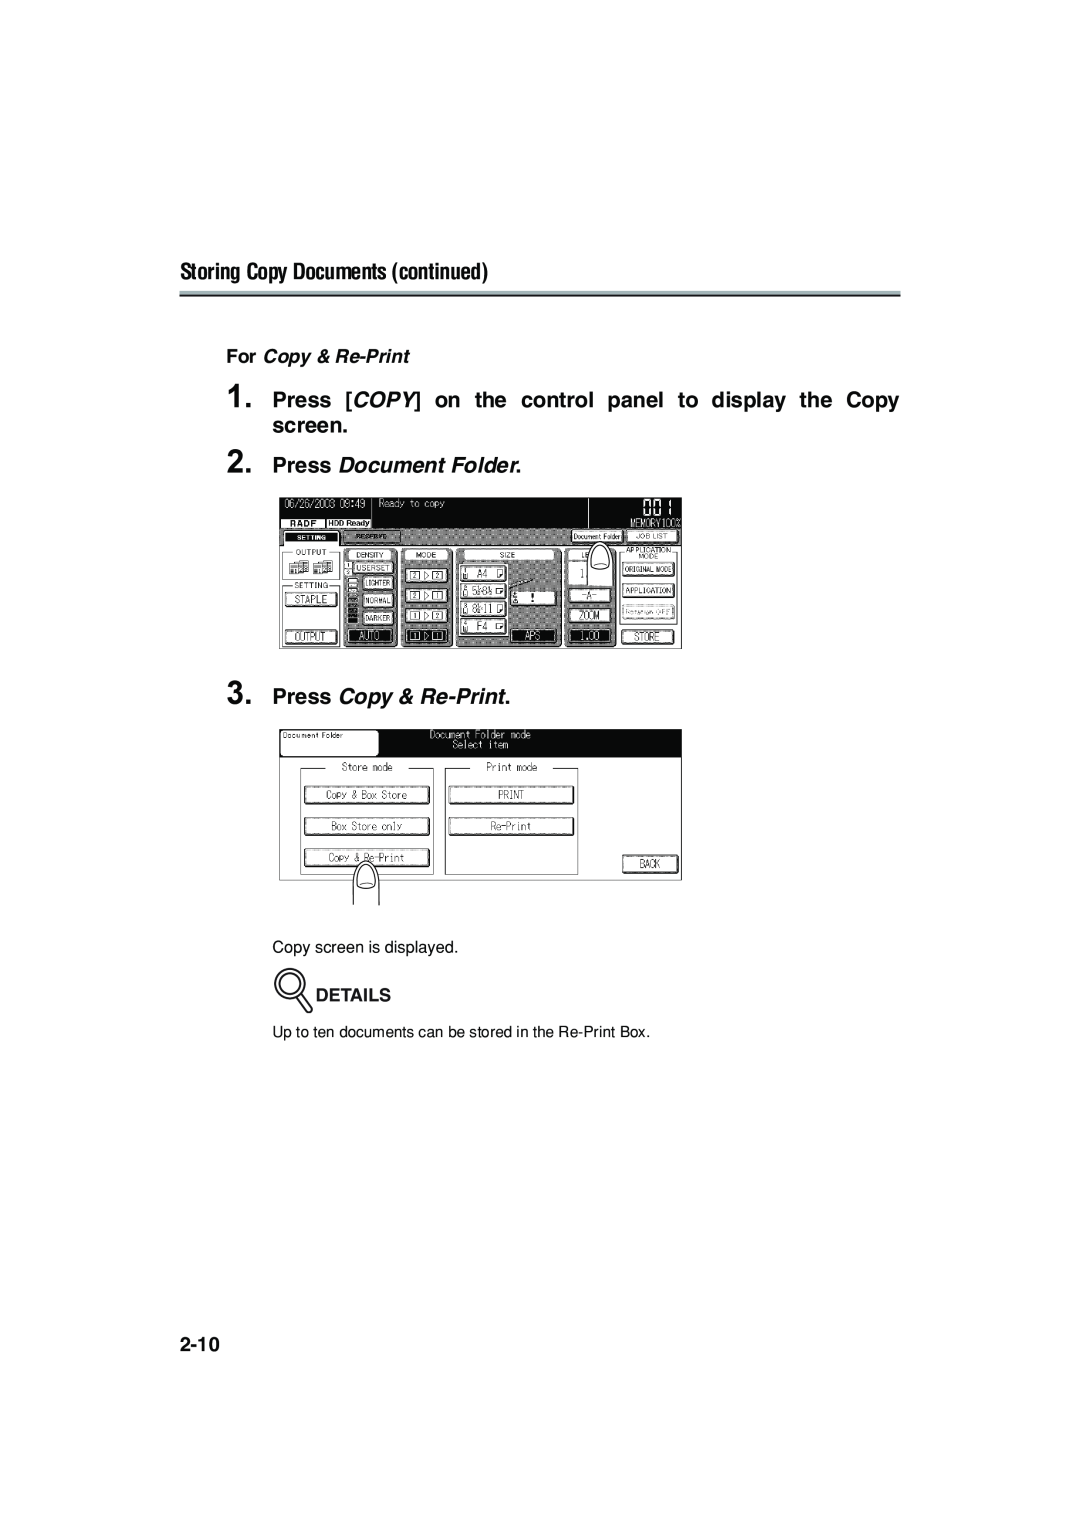 Konica Minolta 7222 Press Document Folder 3. Press Copy & Re-Print, Storing Copy Documents continued, For Copy & Re-Print 